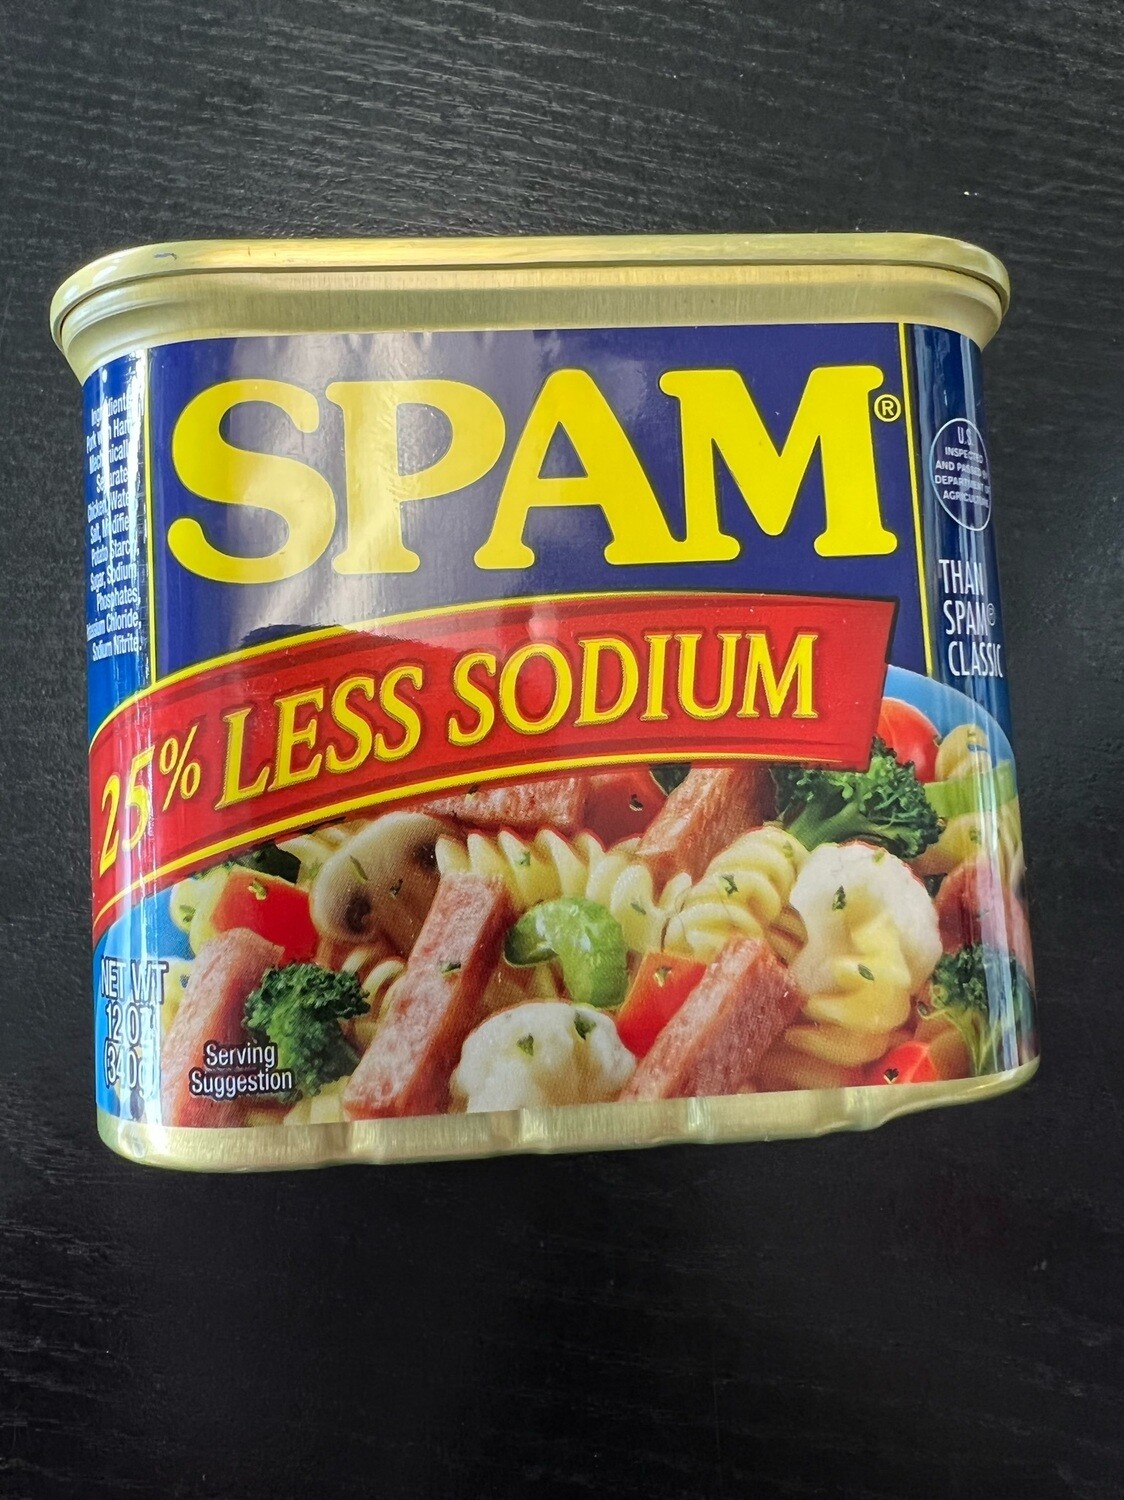 Spam Less Sodium